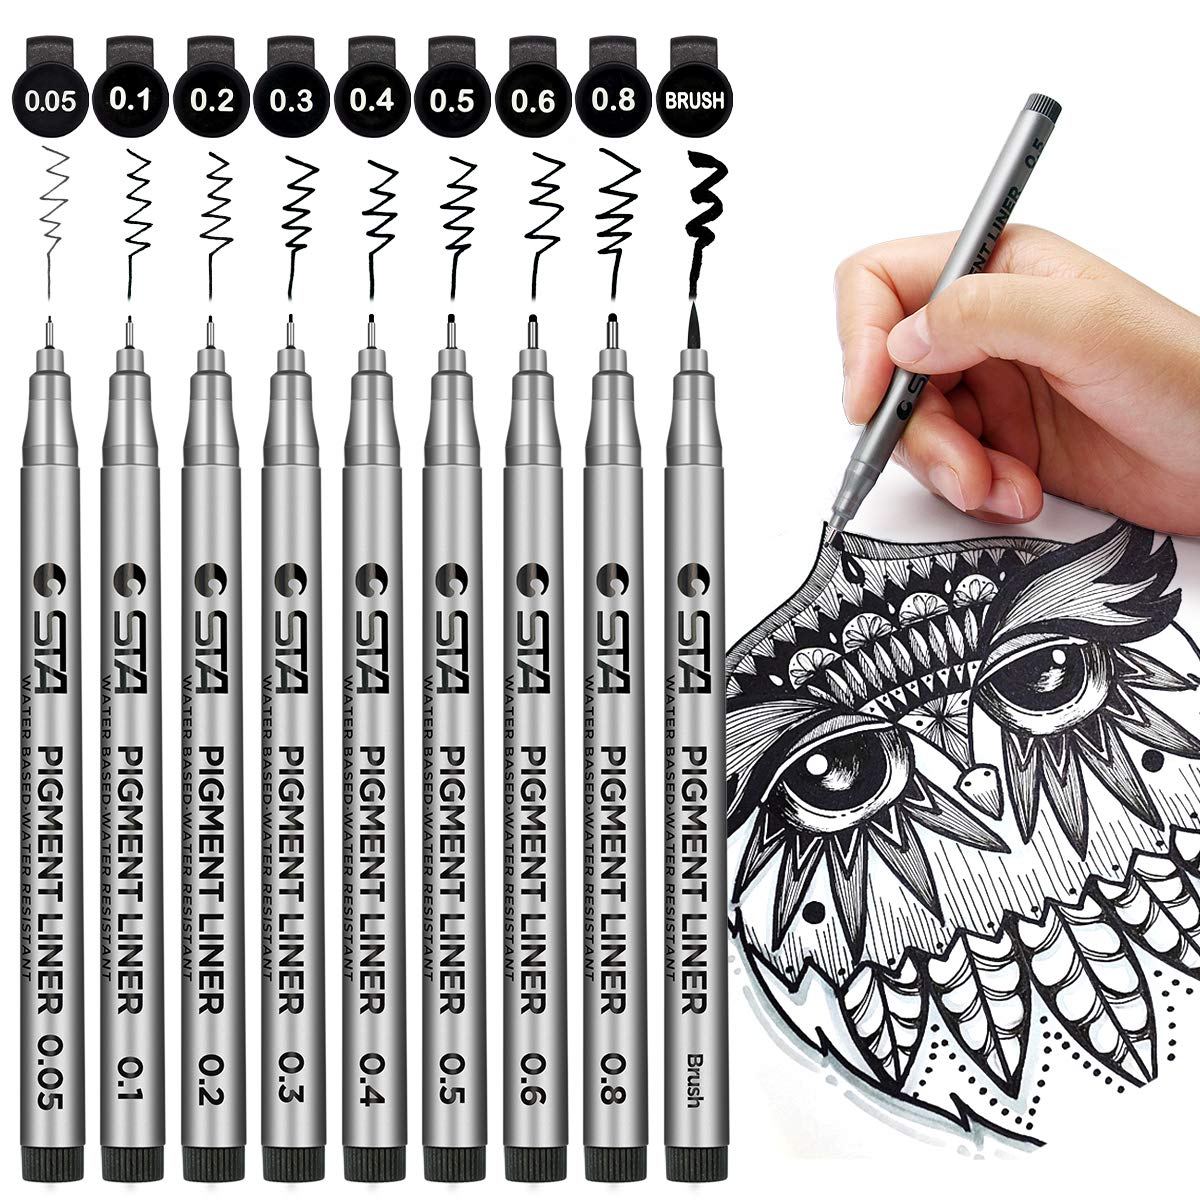 Fish Pen & Ink Illustration - Nature Drawing on Behance